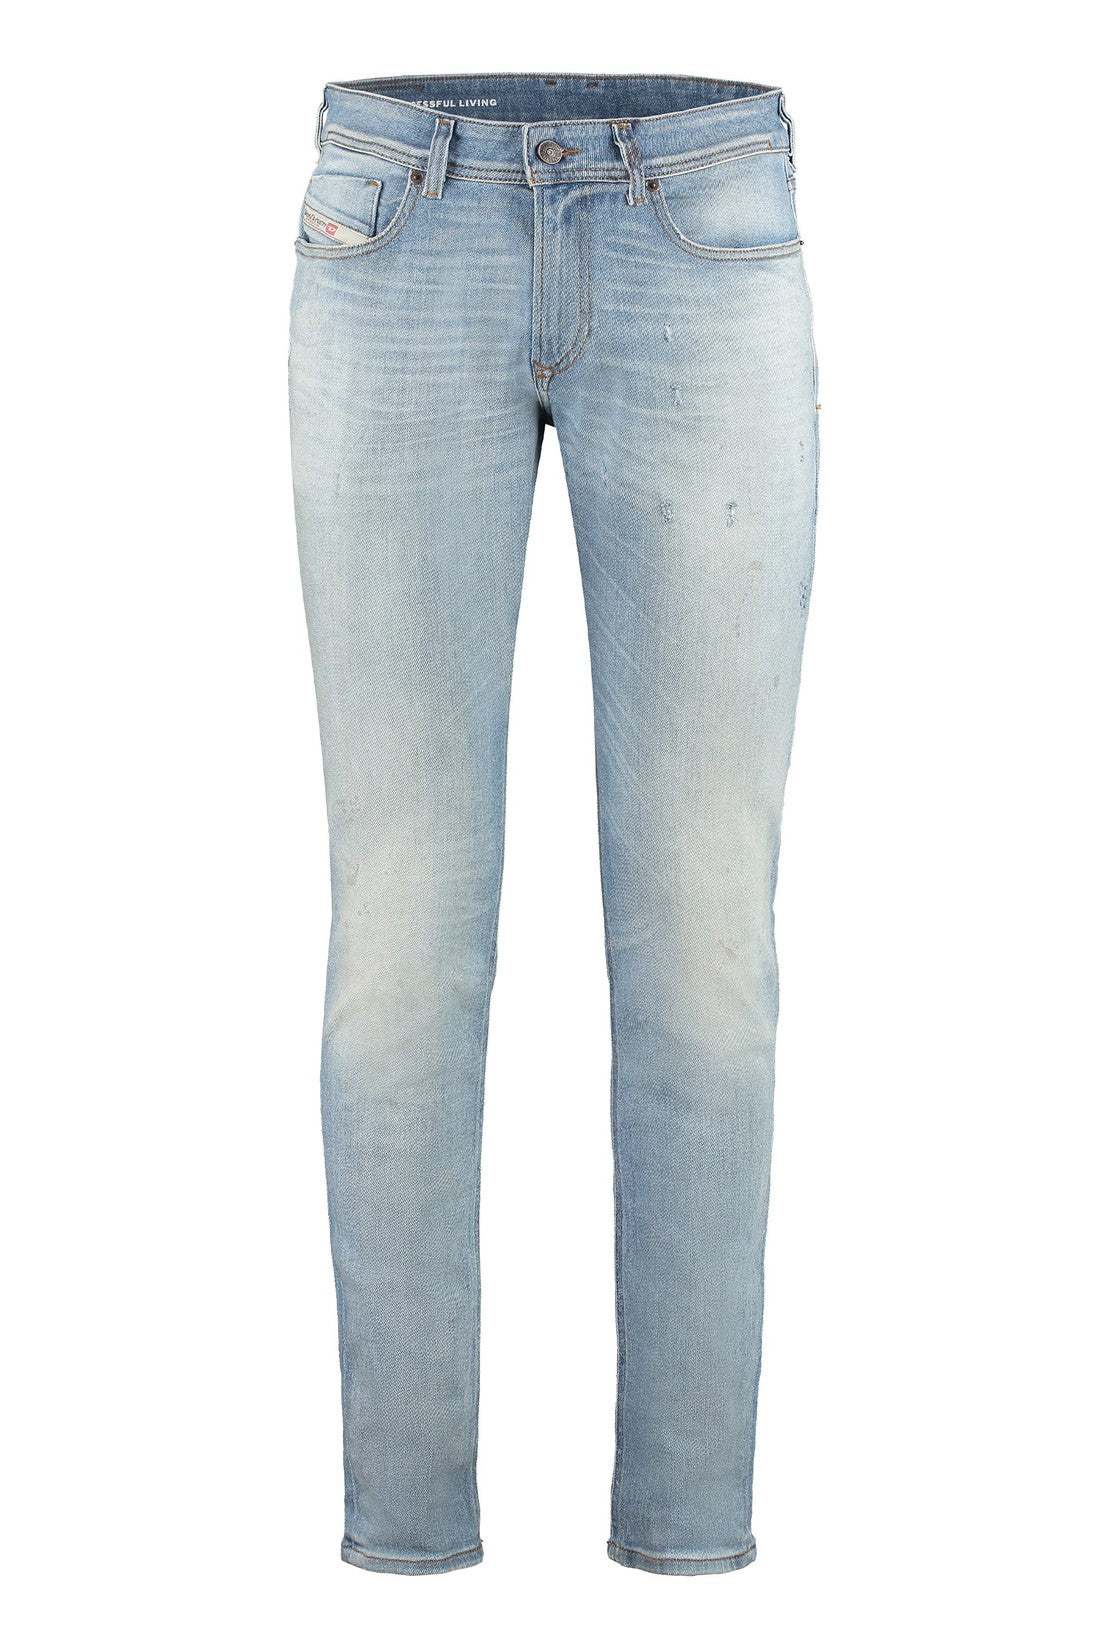 DIESEL-OUTLET-SALE-1979 Sleenker skinny jeans-ARCHIVIST